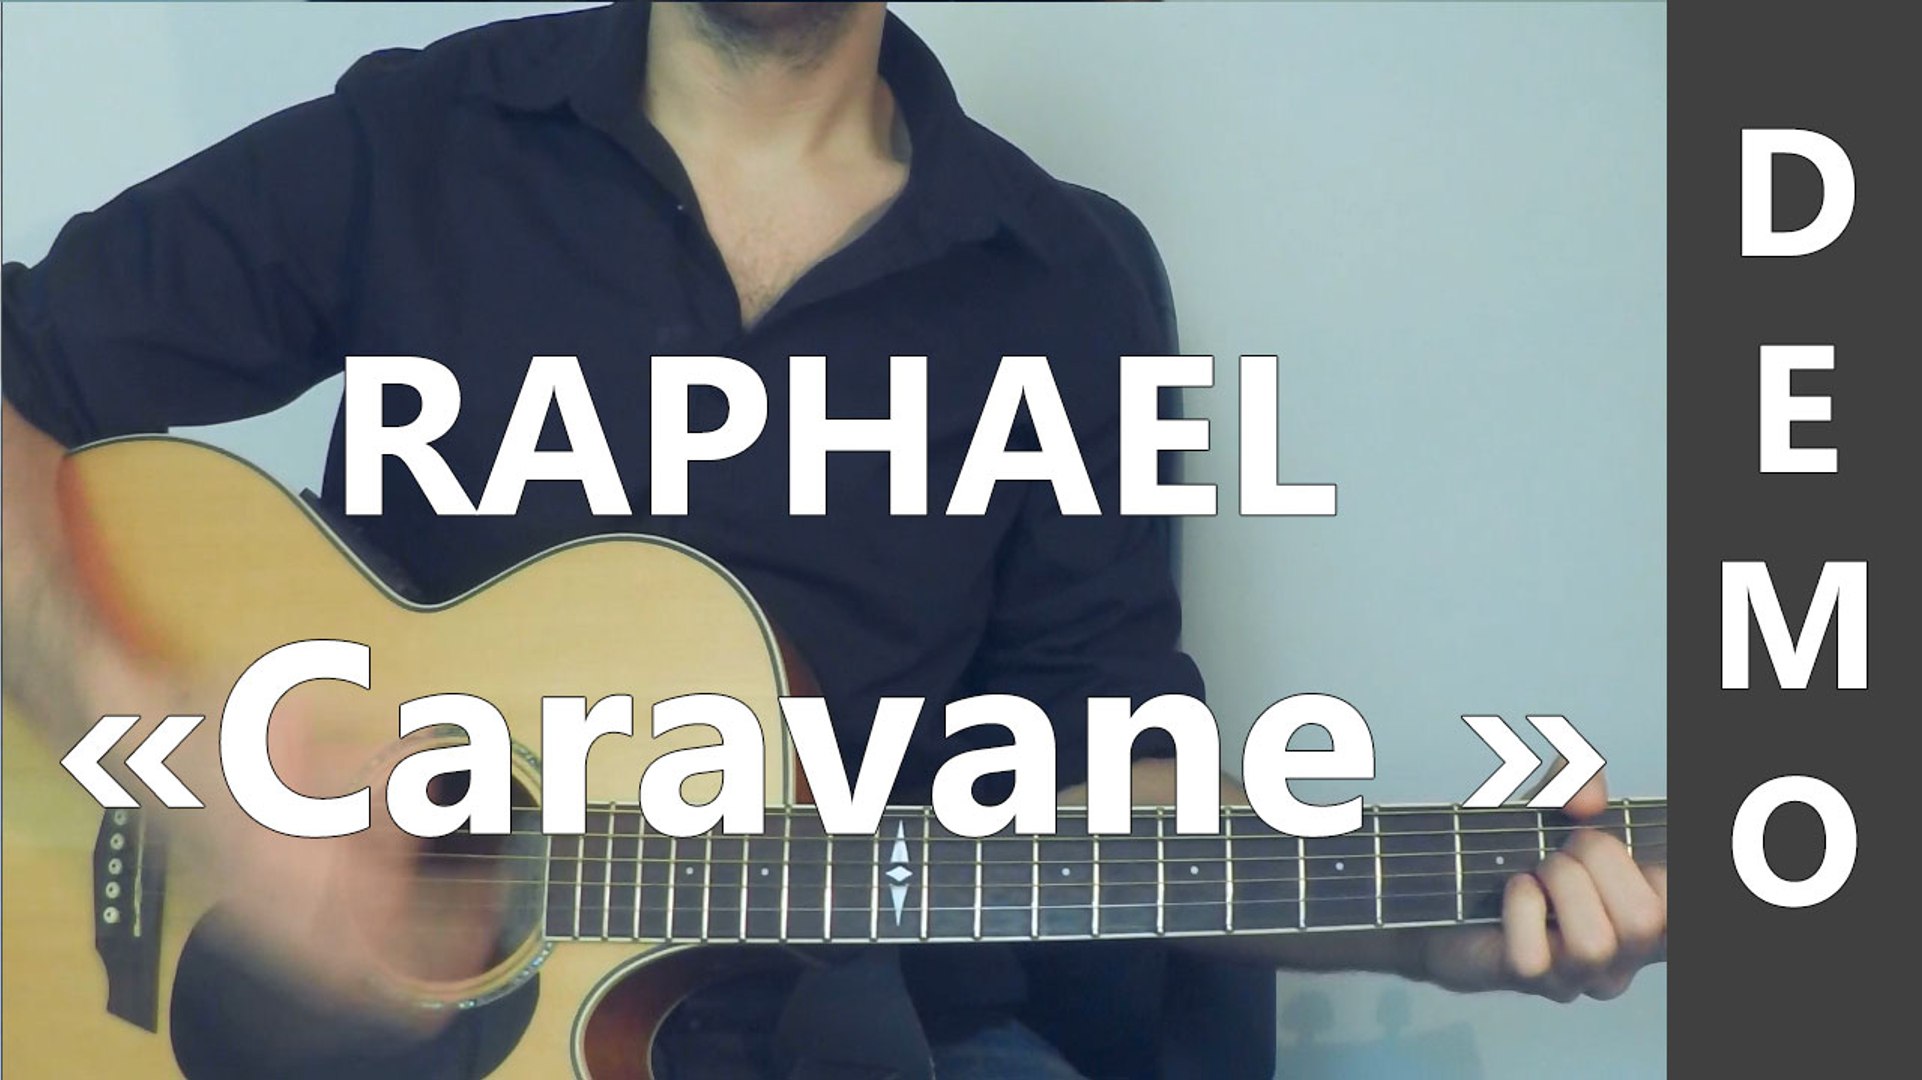 Raphaël - Caravane - DEMO Guitare - Vidéo Dailymotion